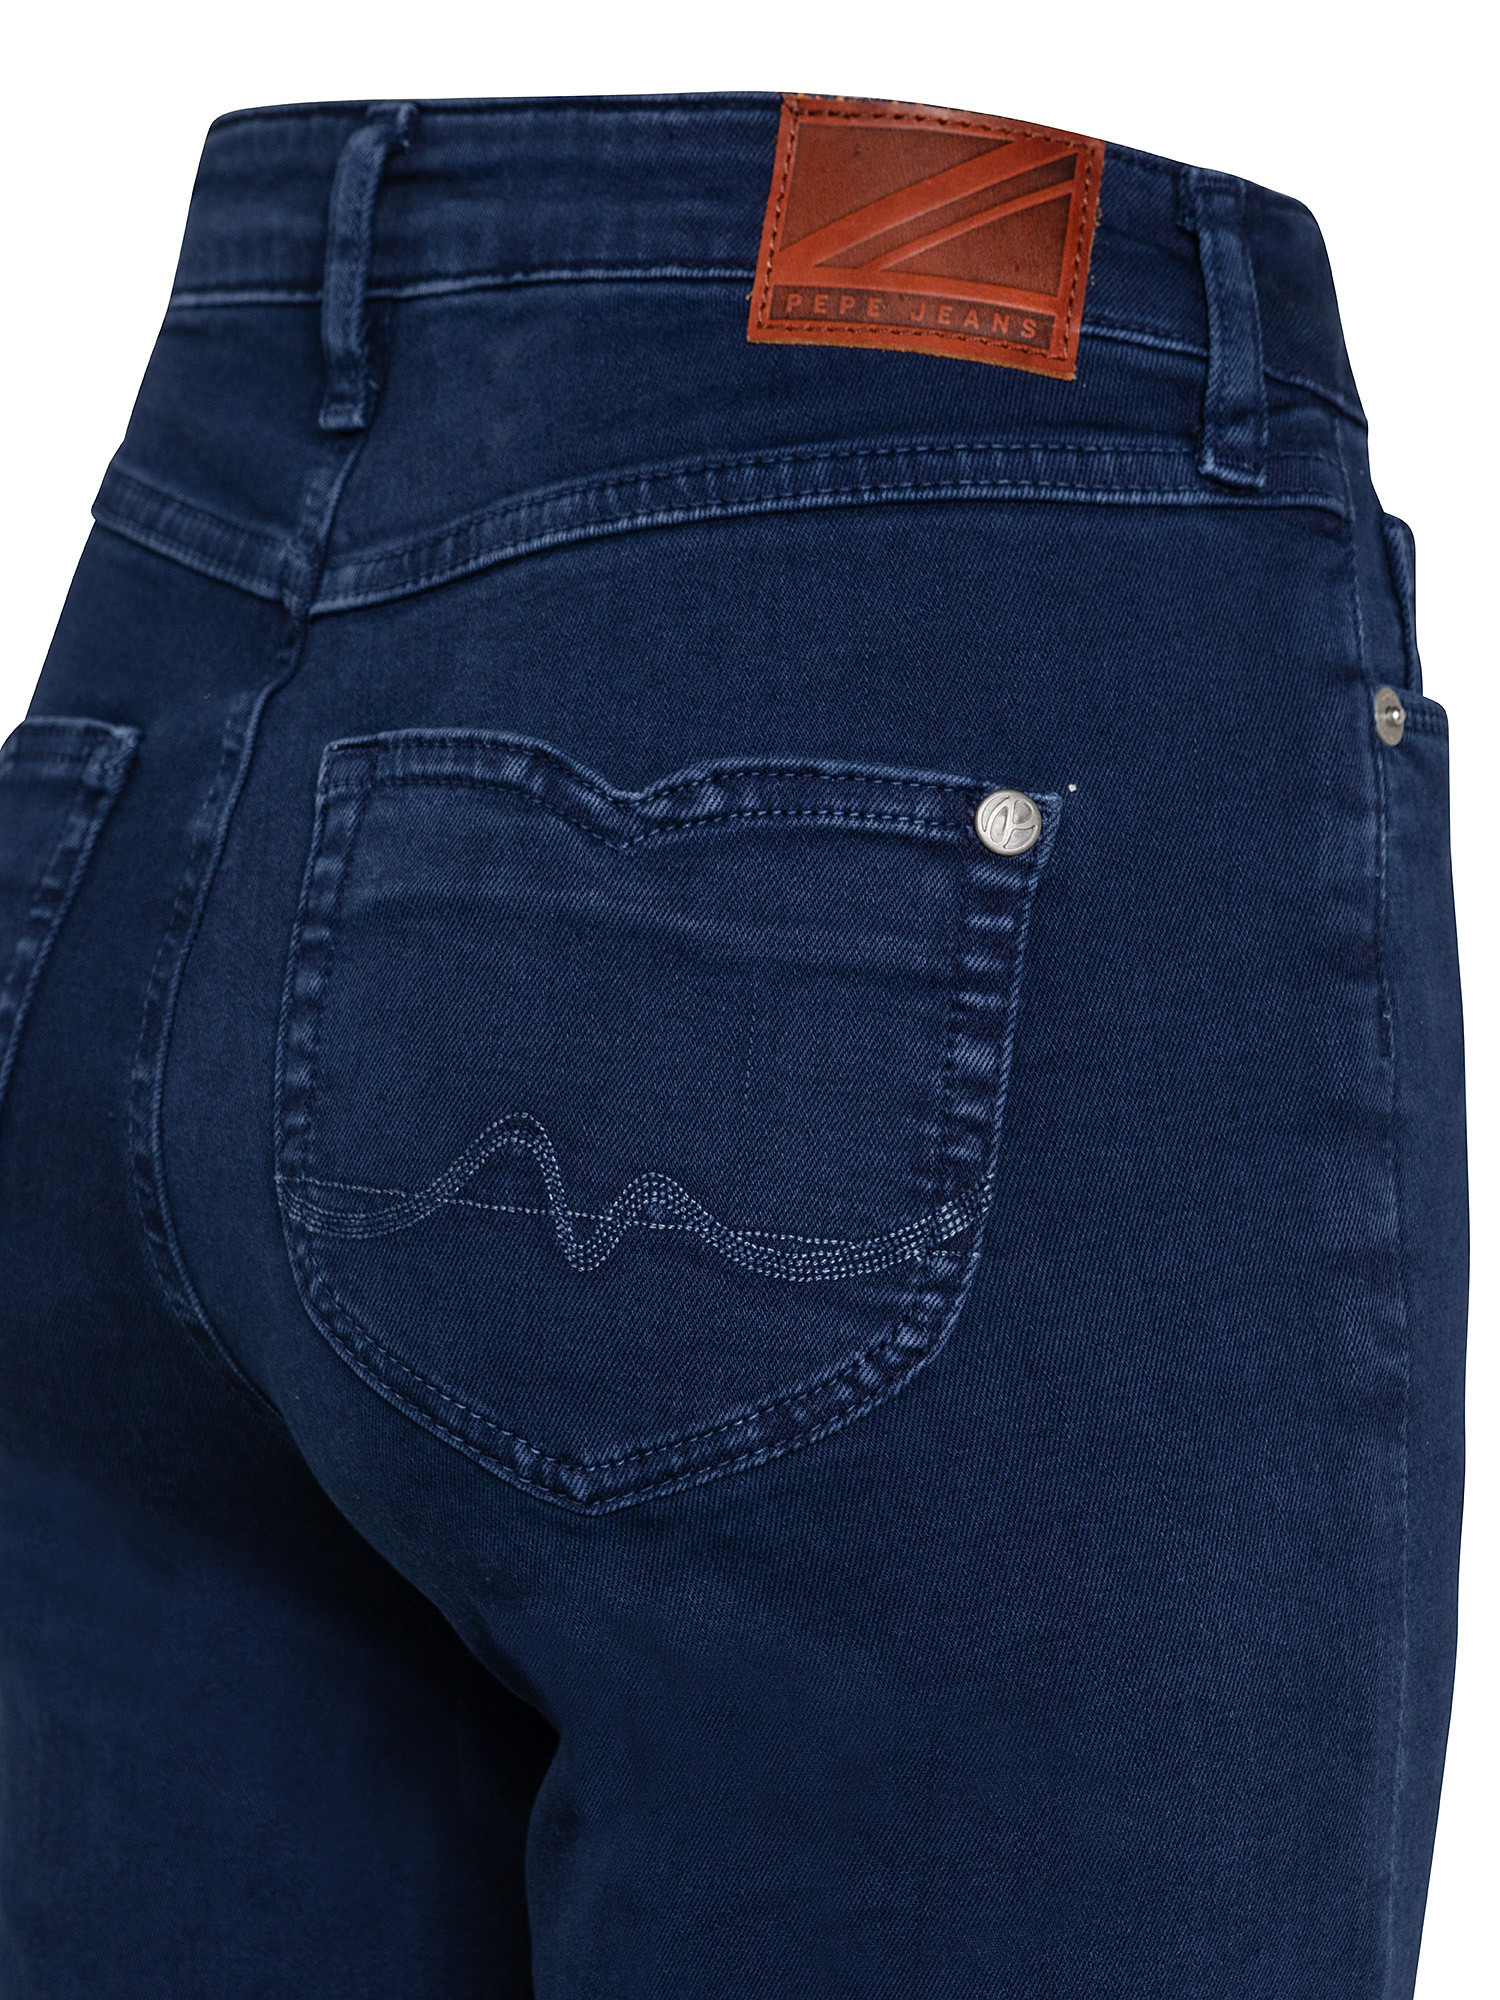 Jeans Willa cinque tasche, Blu scuro, large image number 2